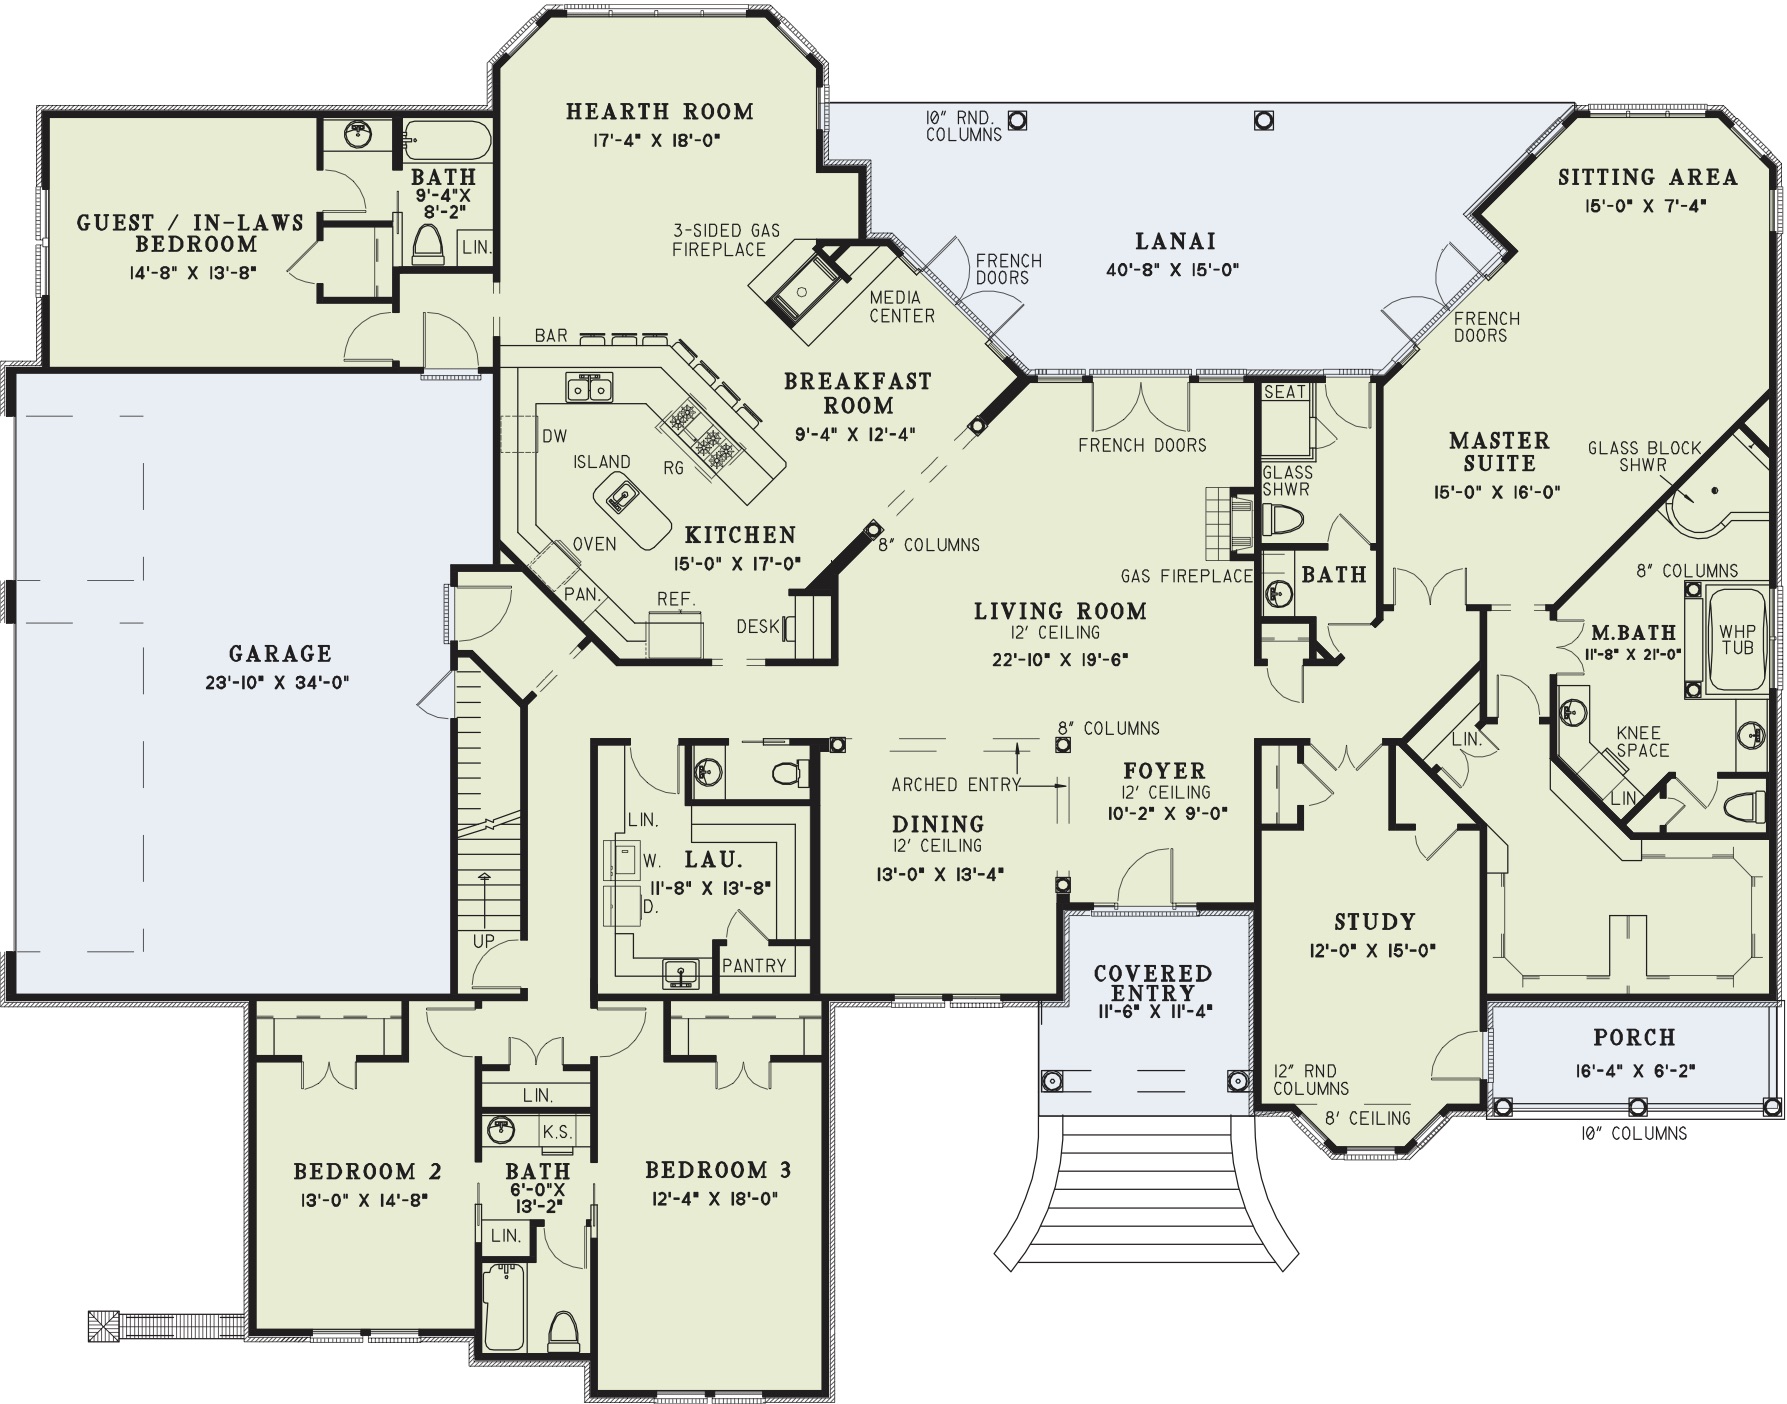 House Plan NDG 1229 Main Floor